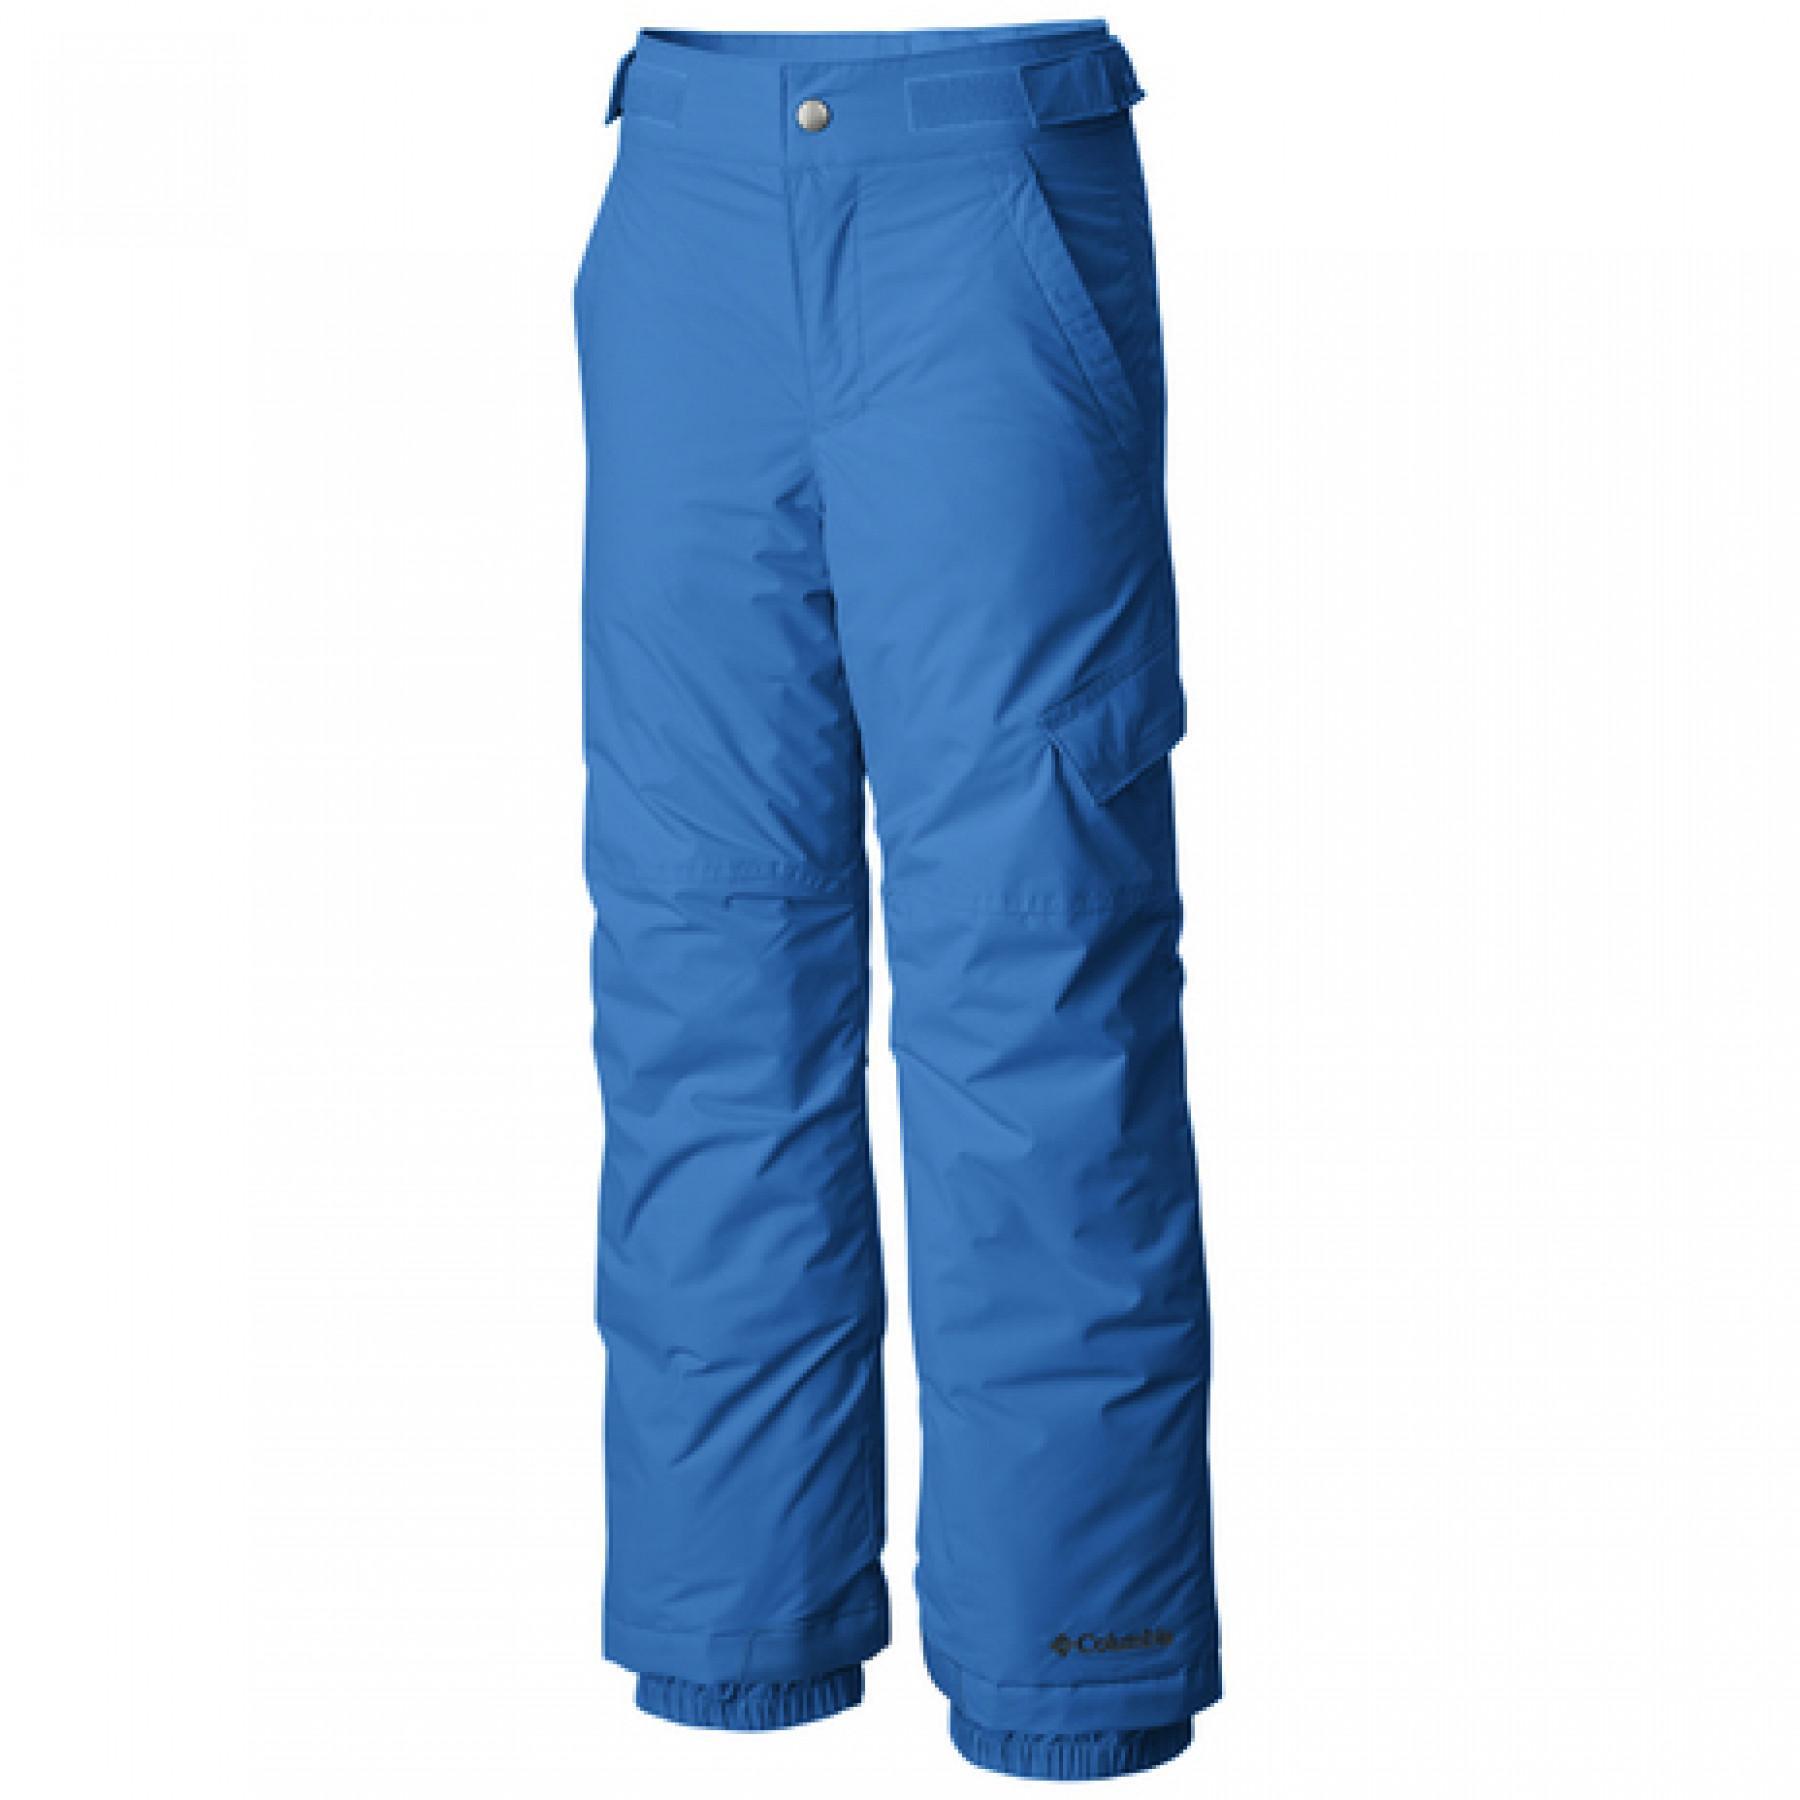 Pantalones para niños Columbia Ice Slope II